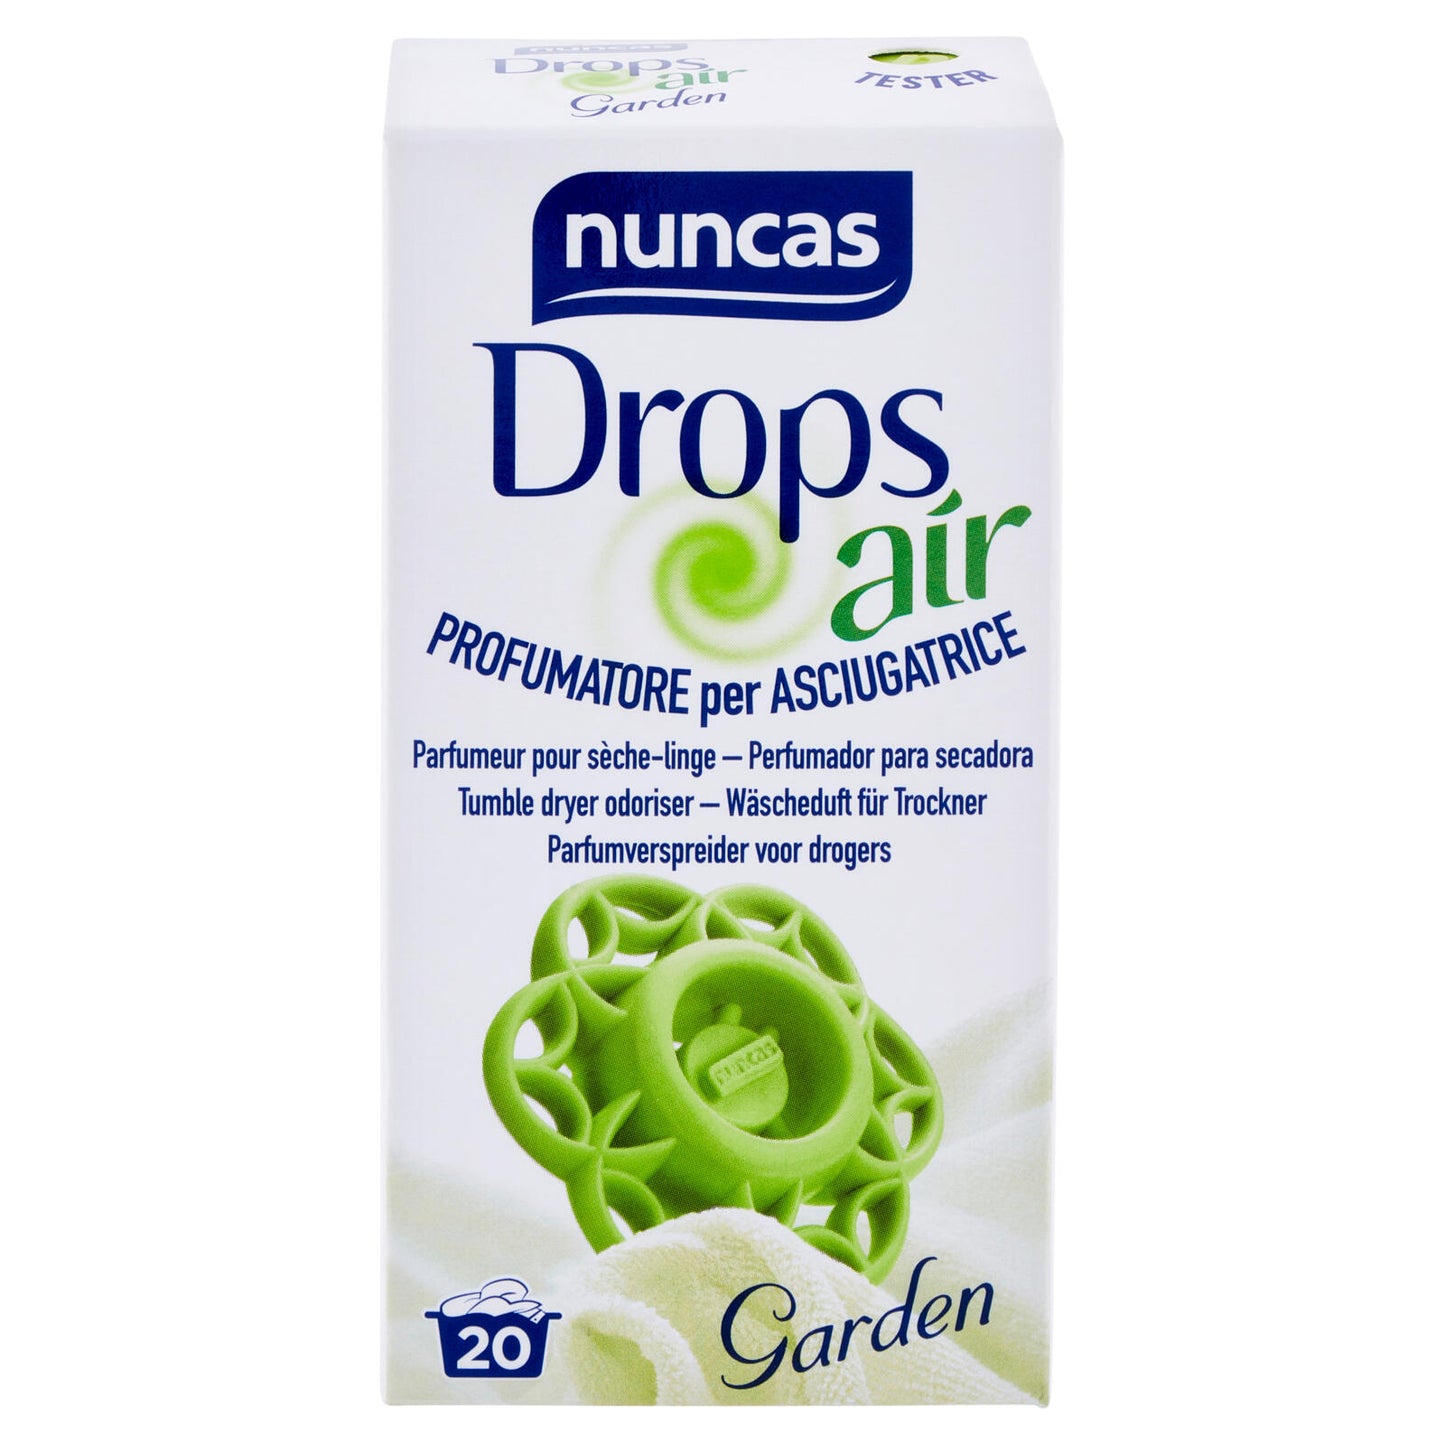 nuncas Drops air Profumatore per Asciugatrice Garden 18 g ->